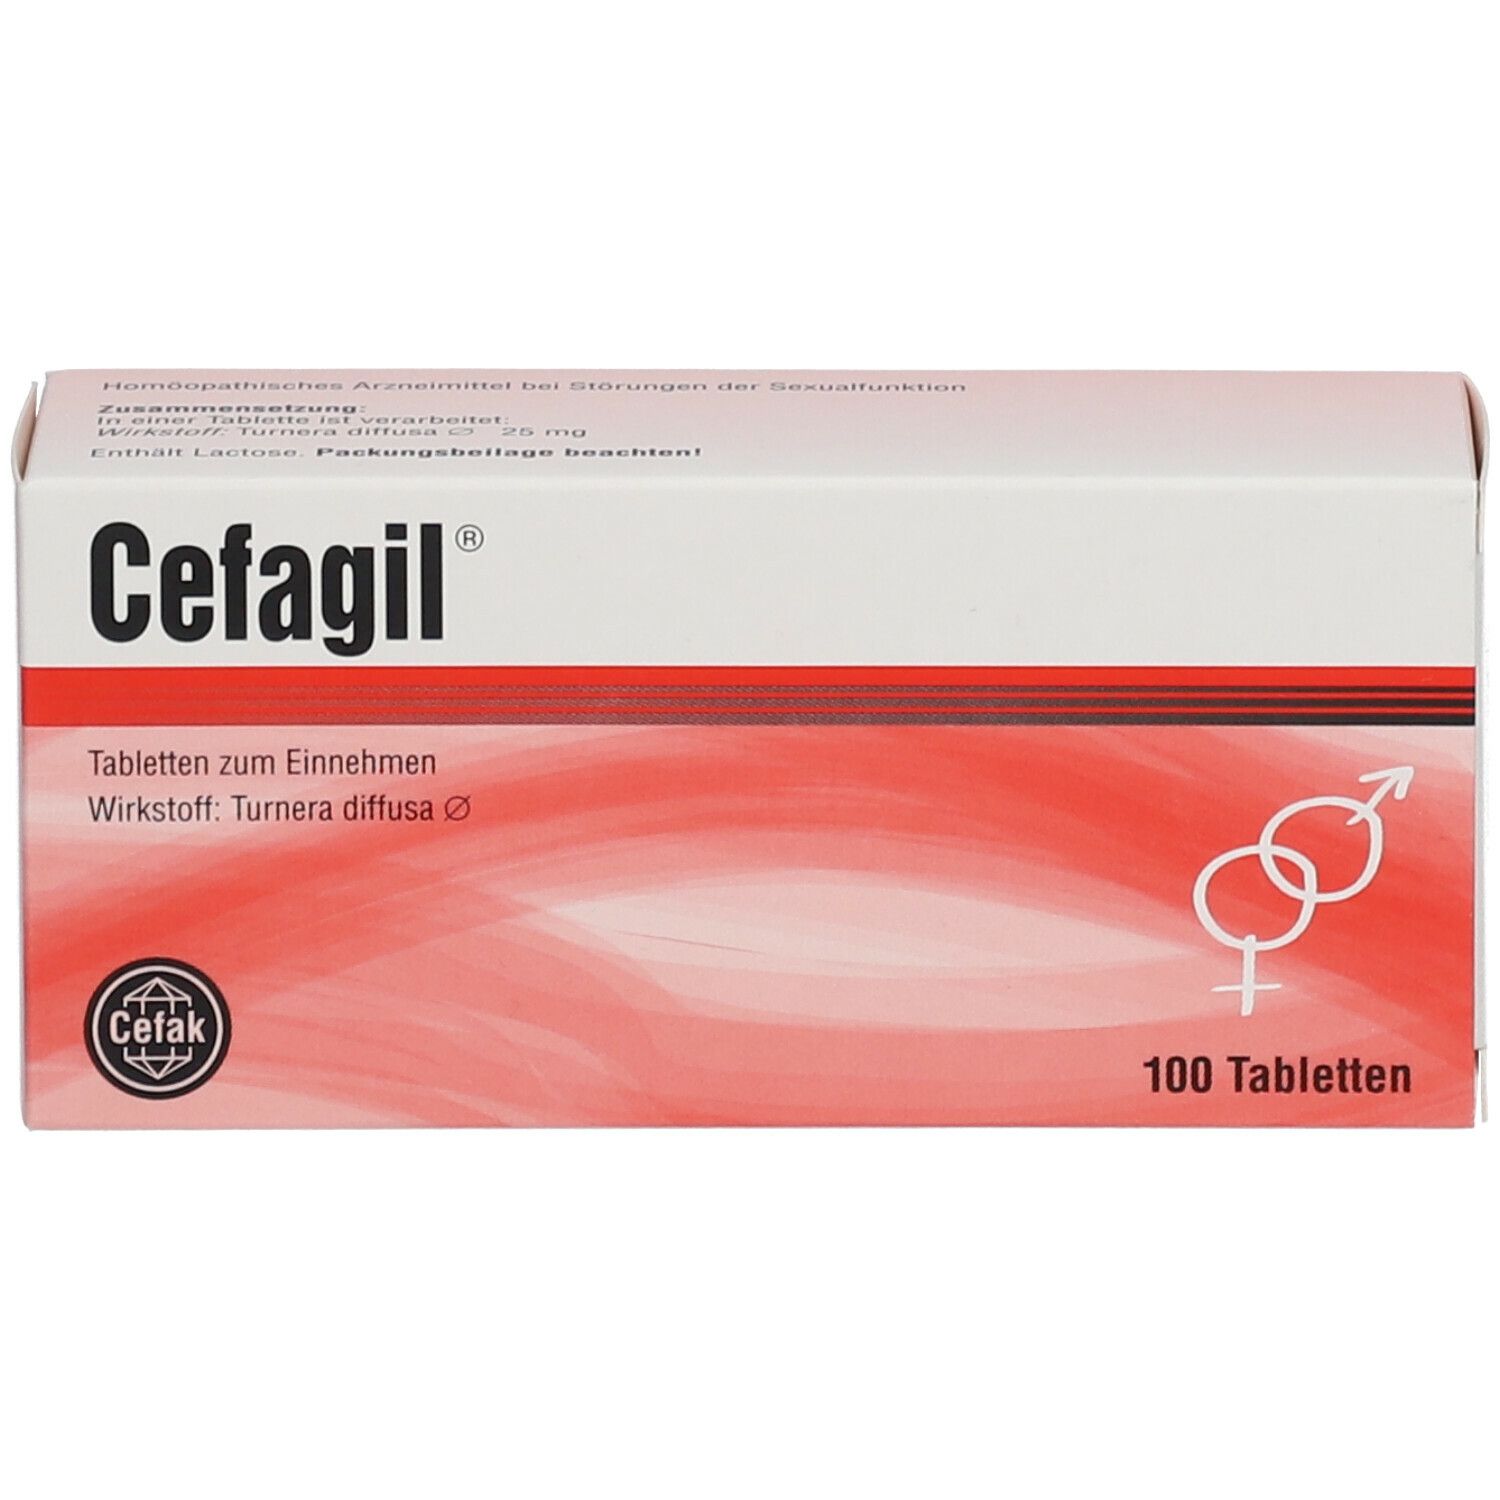 Cefagil® Tabletten